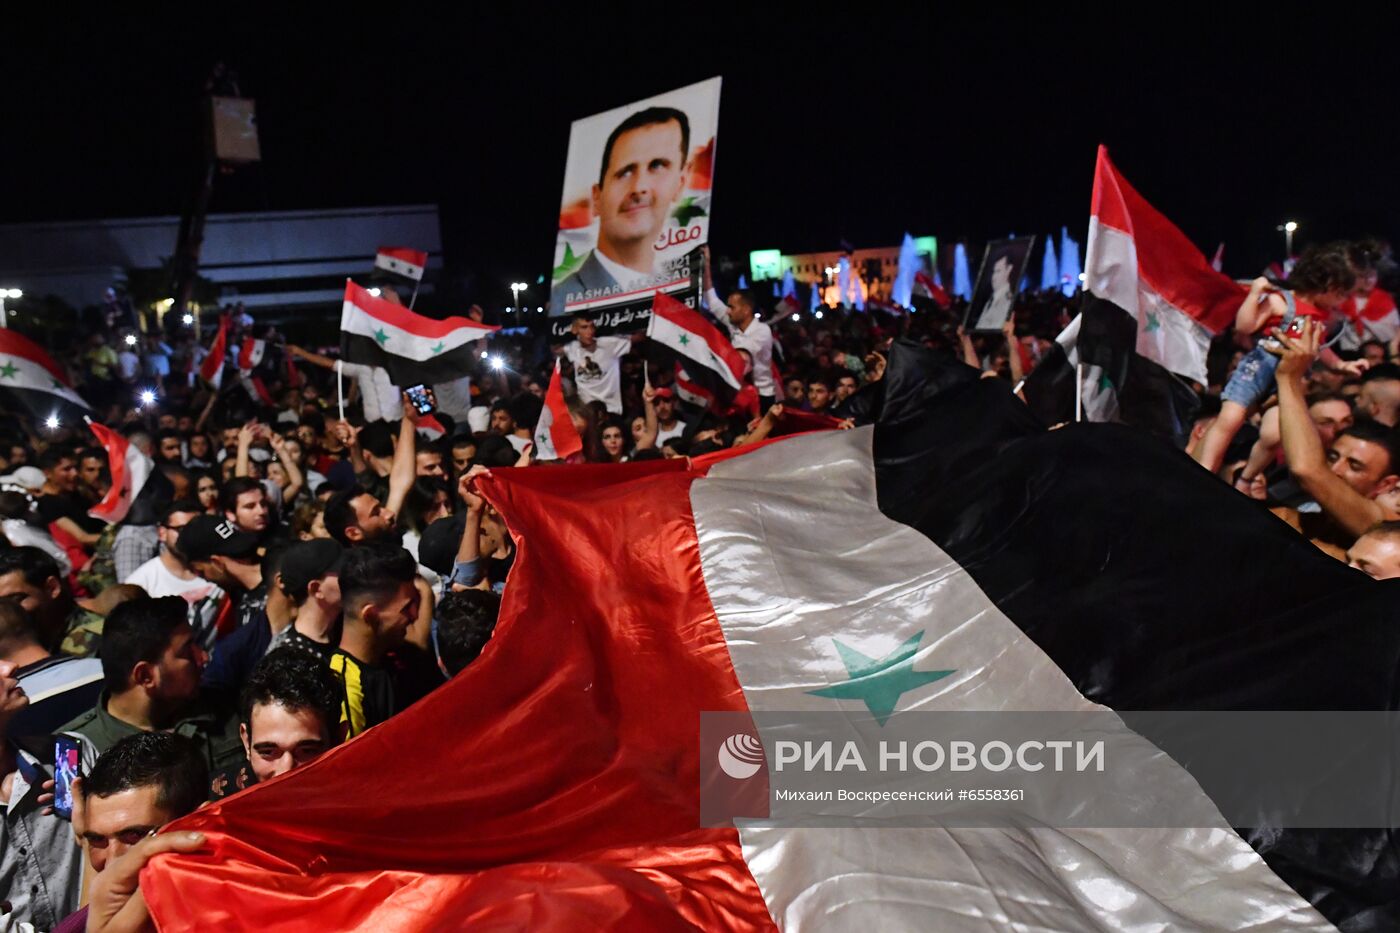 Празднование победы Б. Асада на президентских выборах в Сирии